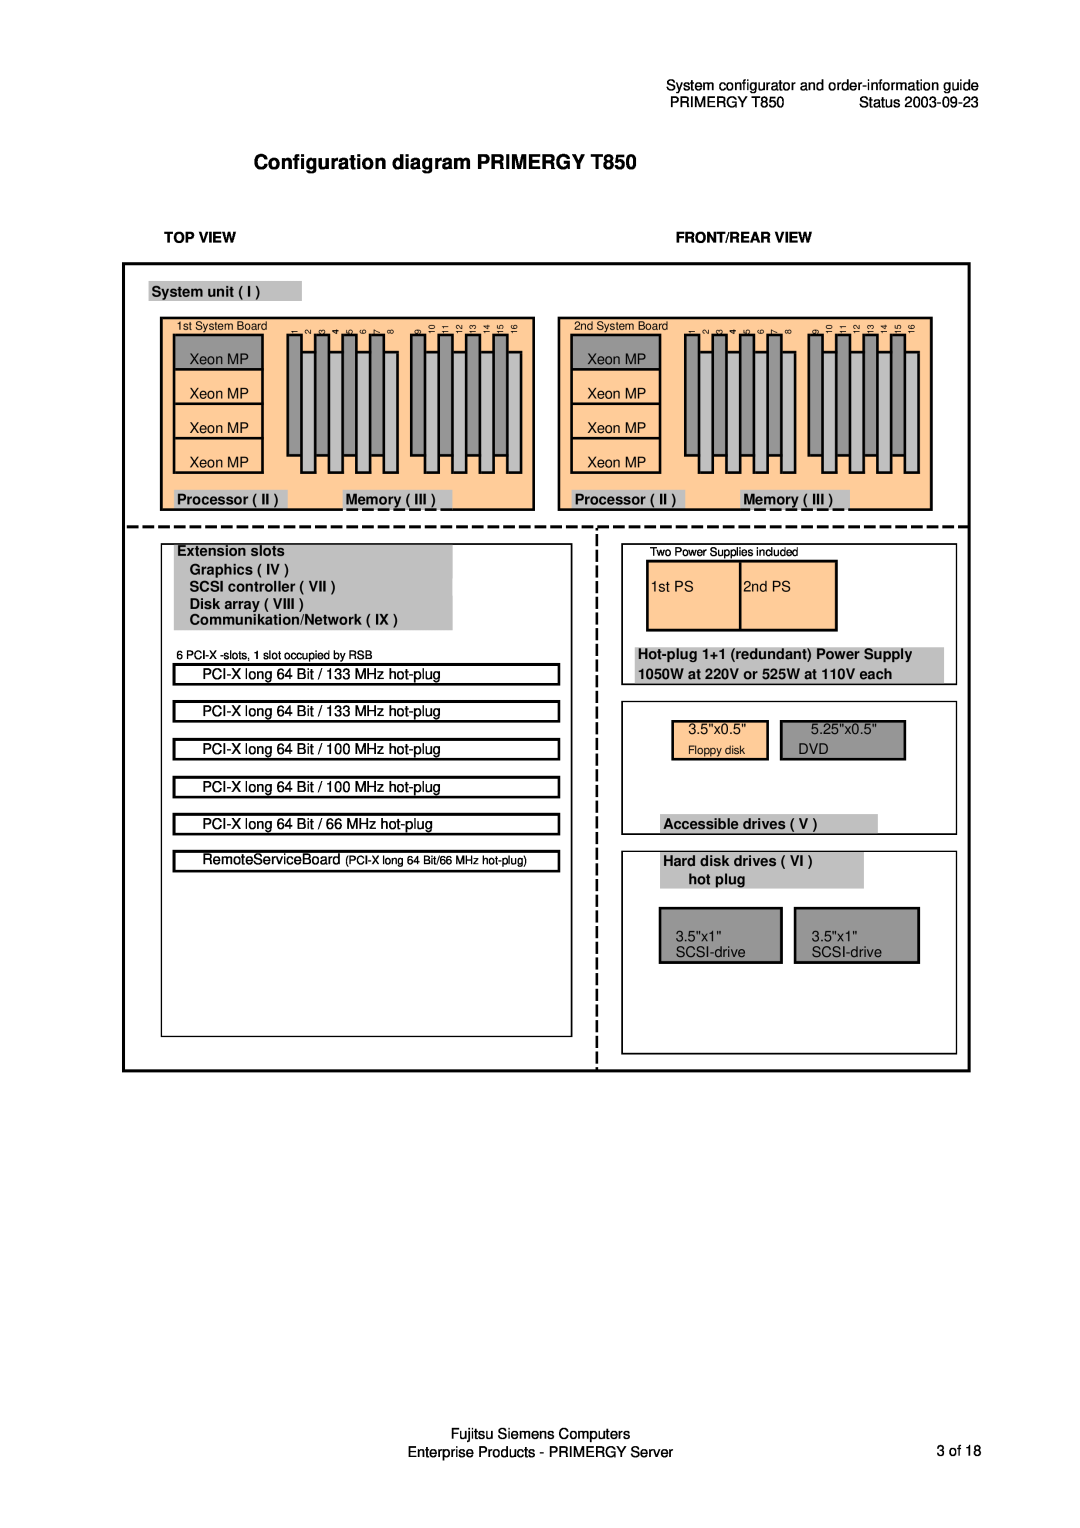 Fujitsu Configuration diagram PRIMERGY T850, Top View, Front/Rear View, System unit, Disk array Communikation/Network 